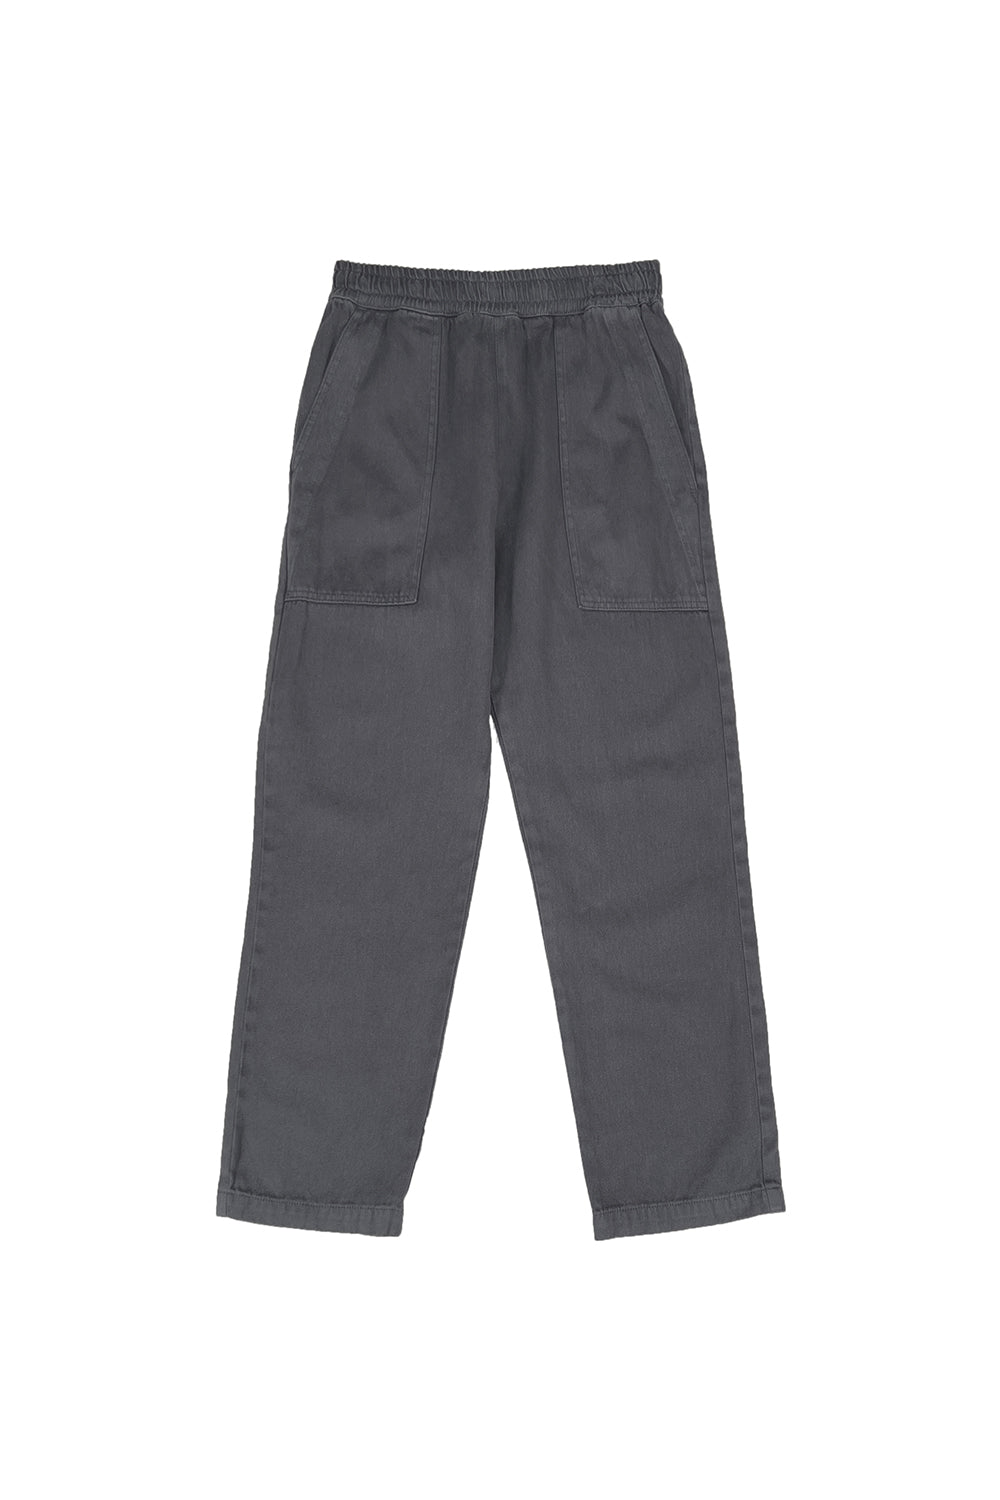 Ocean Pant | Jungmaven Hemp Clothing & Accessories / Color: Diesel Gray